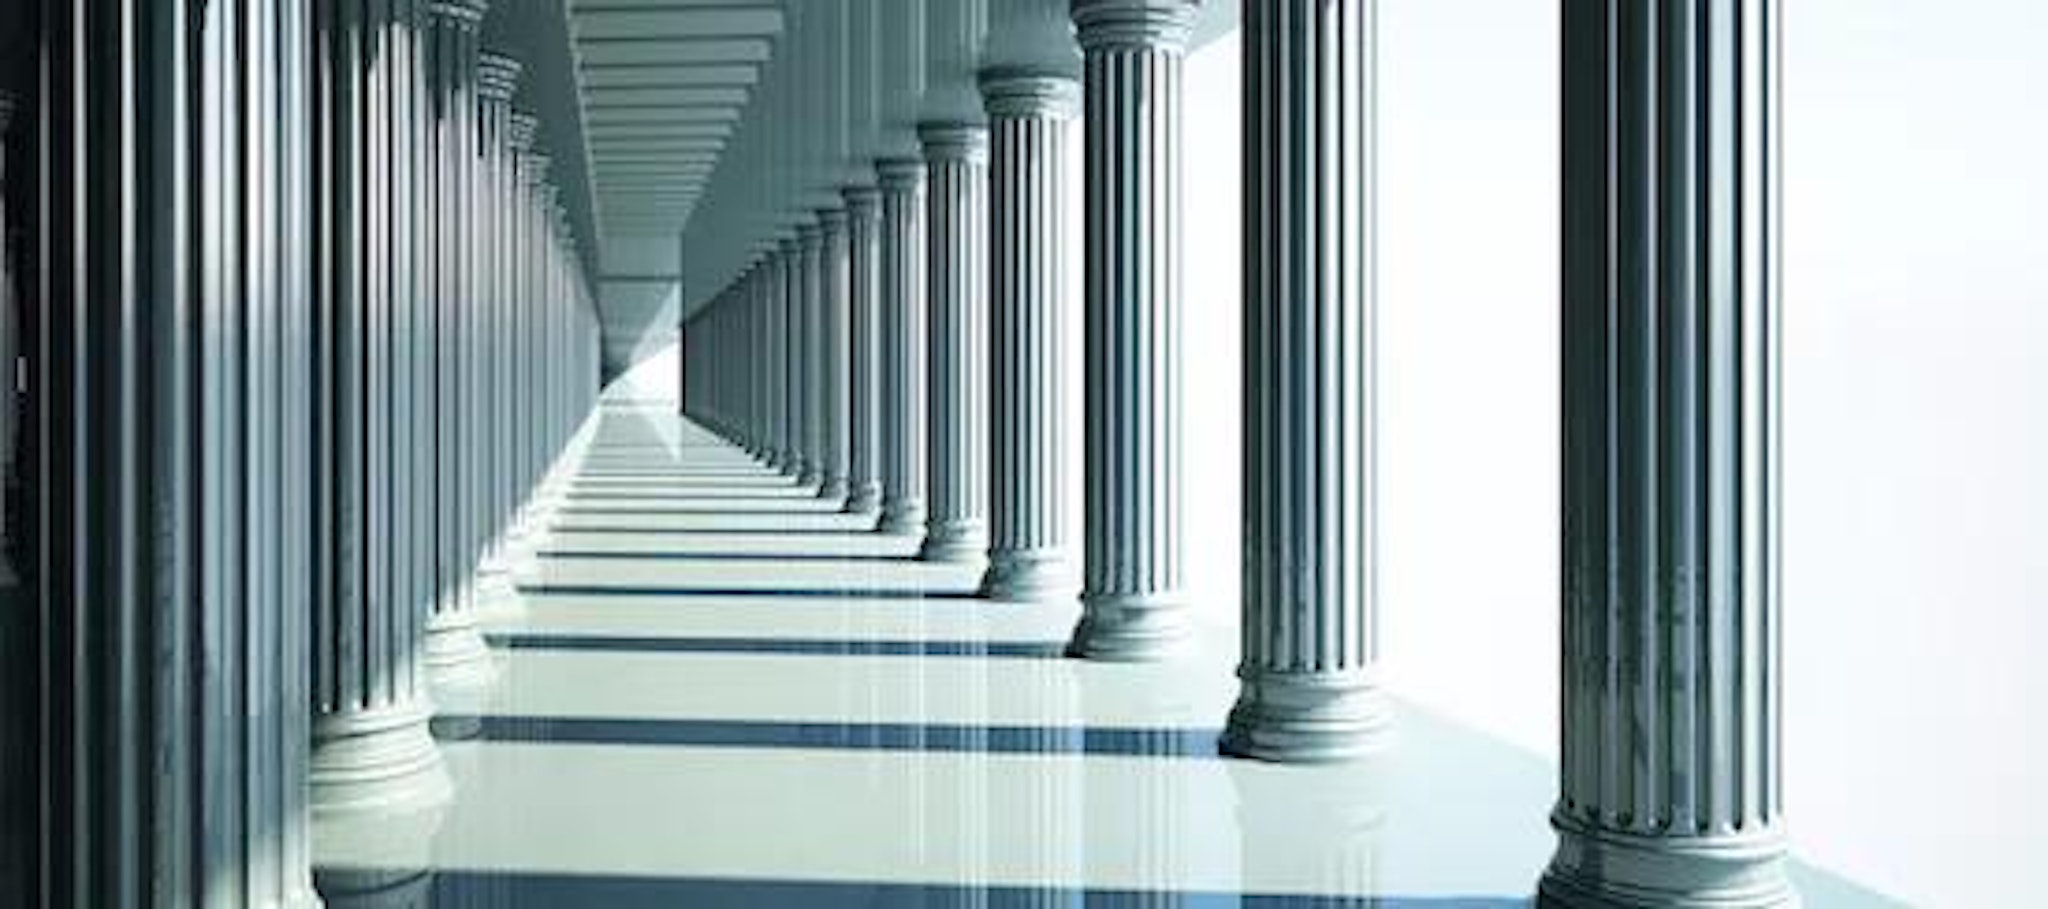 Image of pillars representing the stakeholder model of corporate governance.